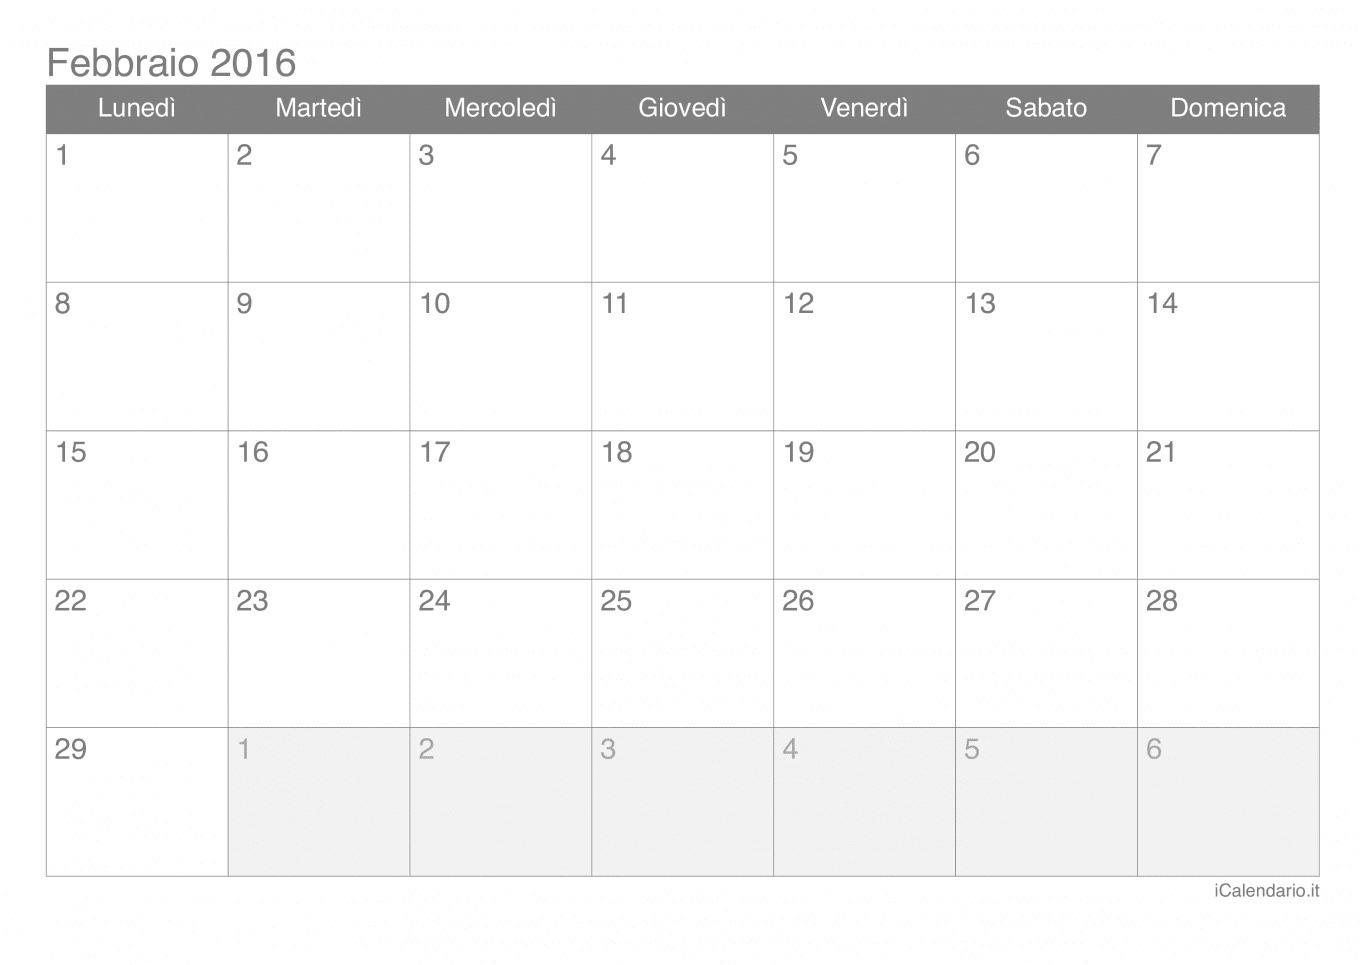 Calendario di febbraio 2016